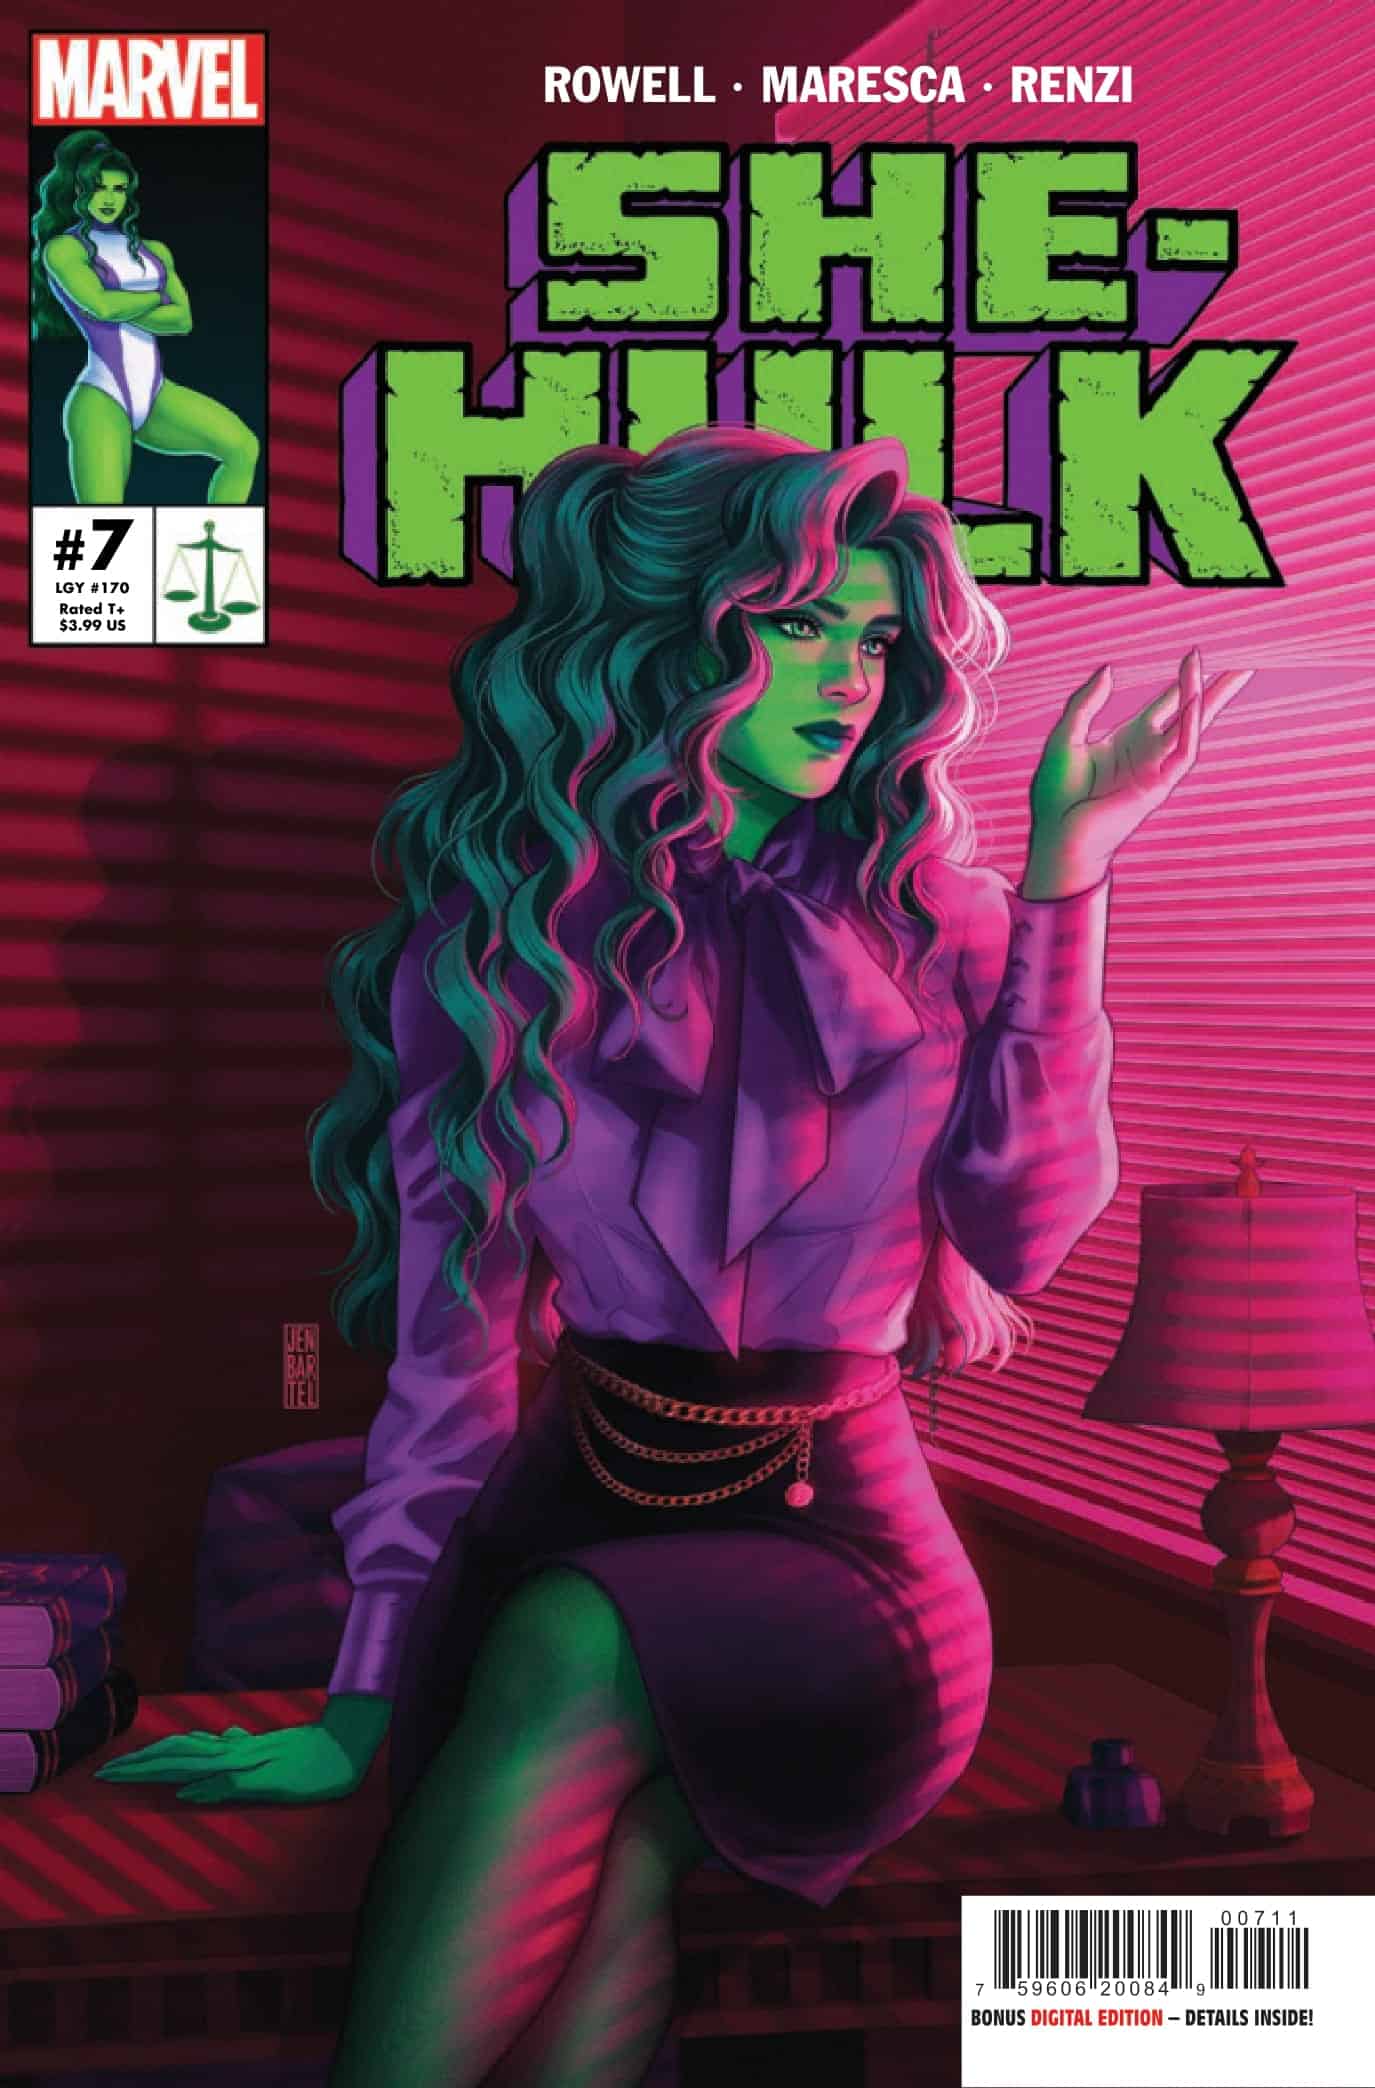 She-Hulk #14 Review – Weird Science Marvel Comics